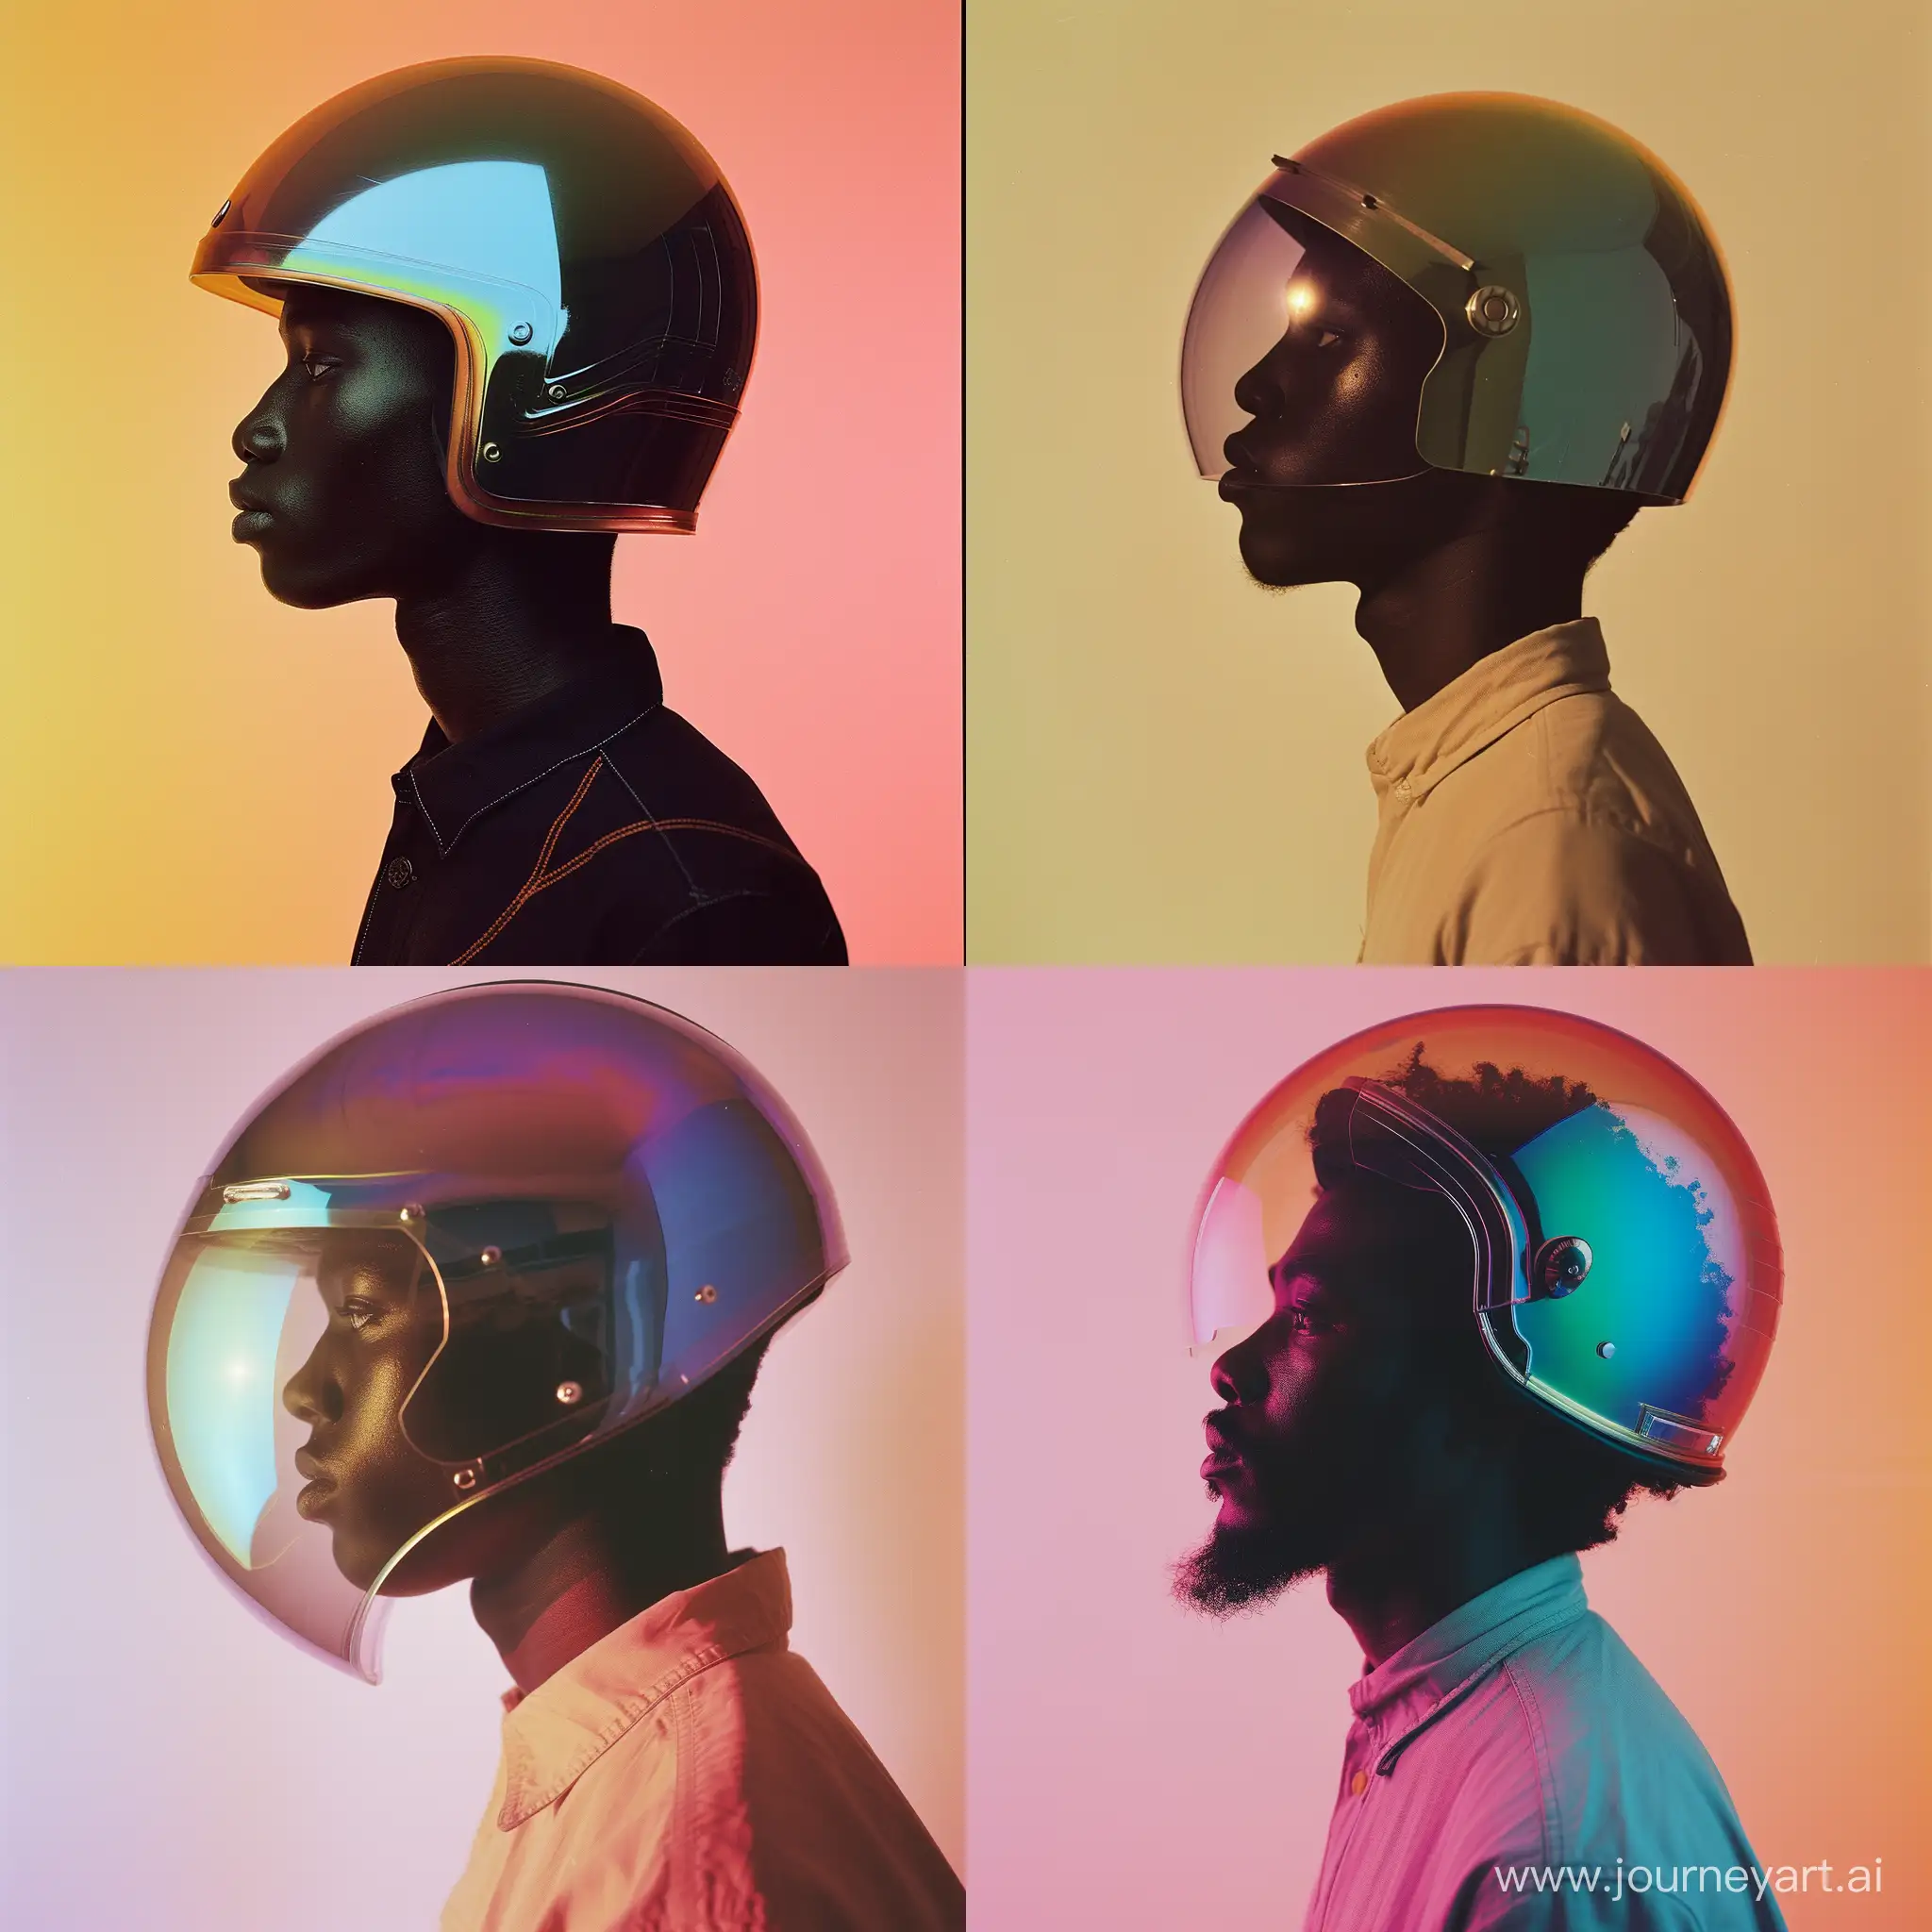 Vintage-Style-Black-Young-Men-in-CosmosInspired-Plexiglass-Helmets